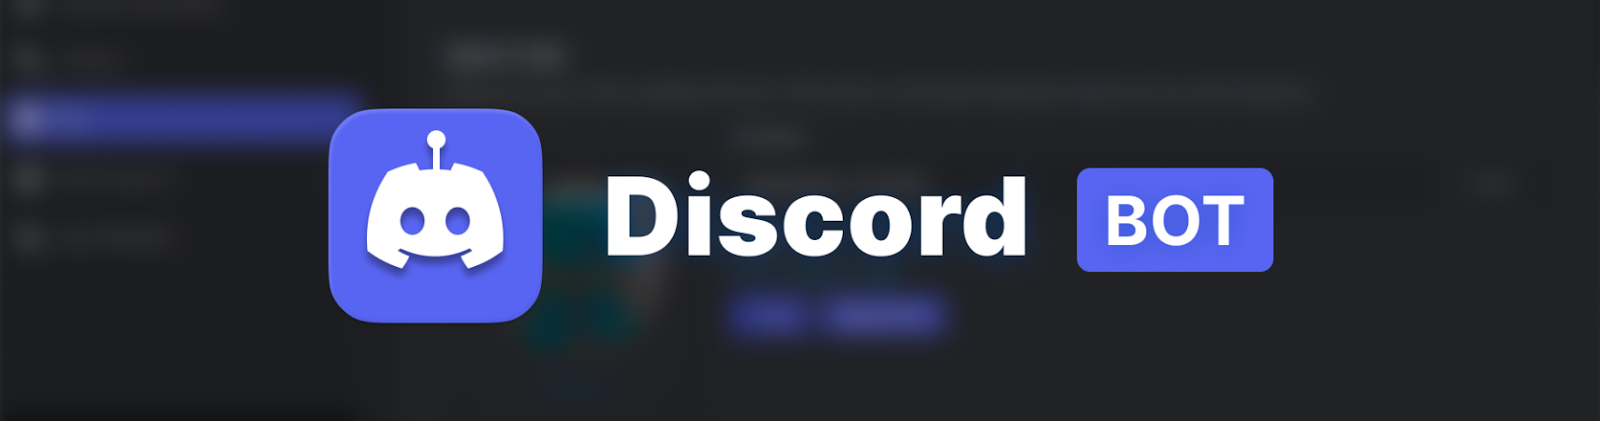 Discord logo next to a virtual bot.